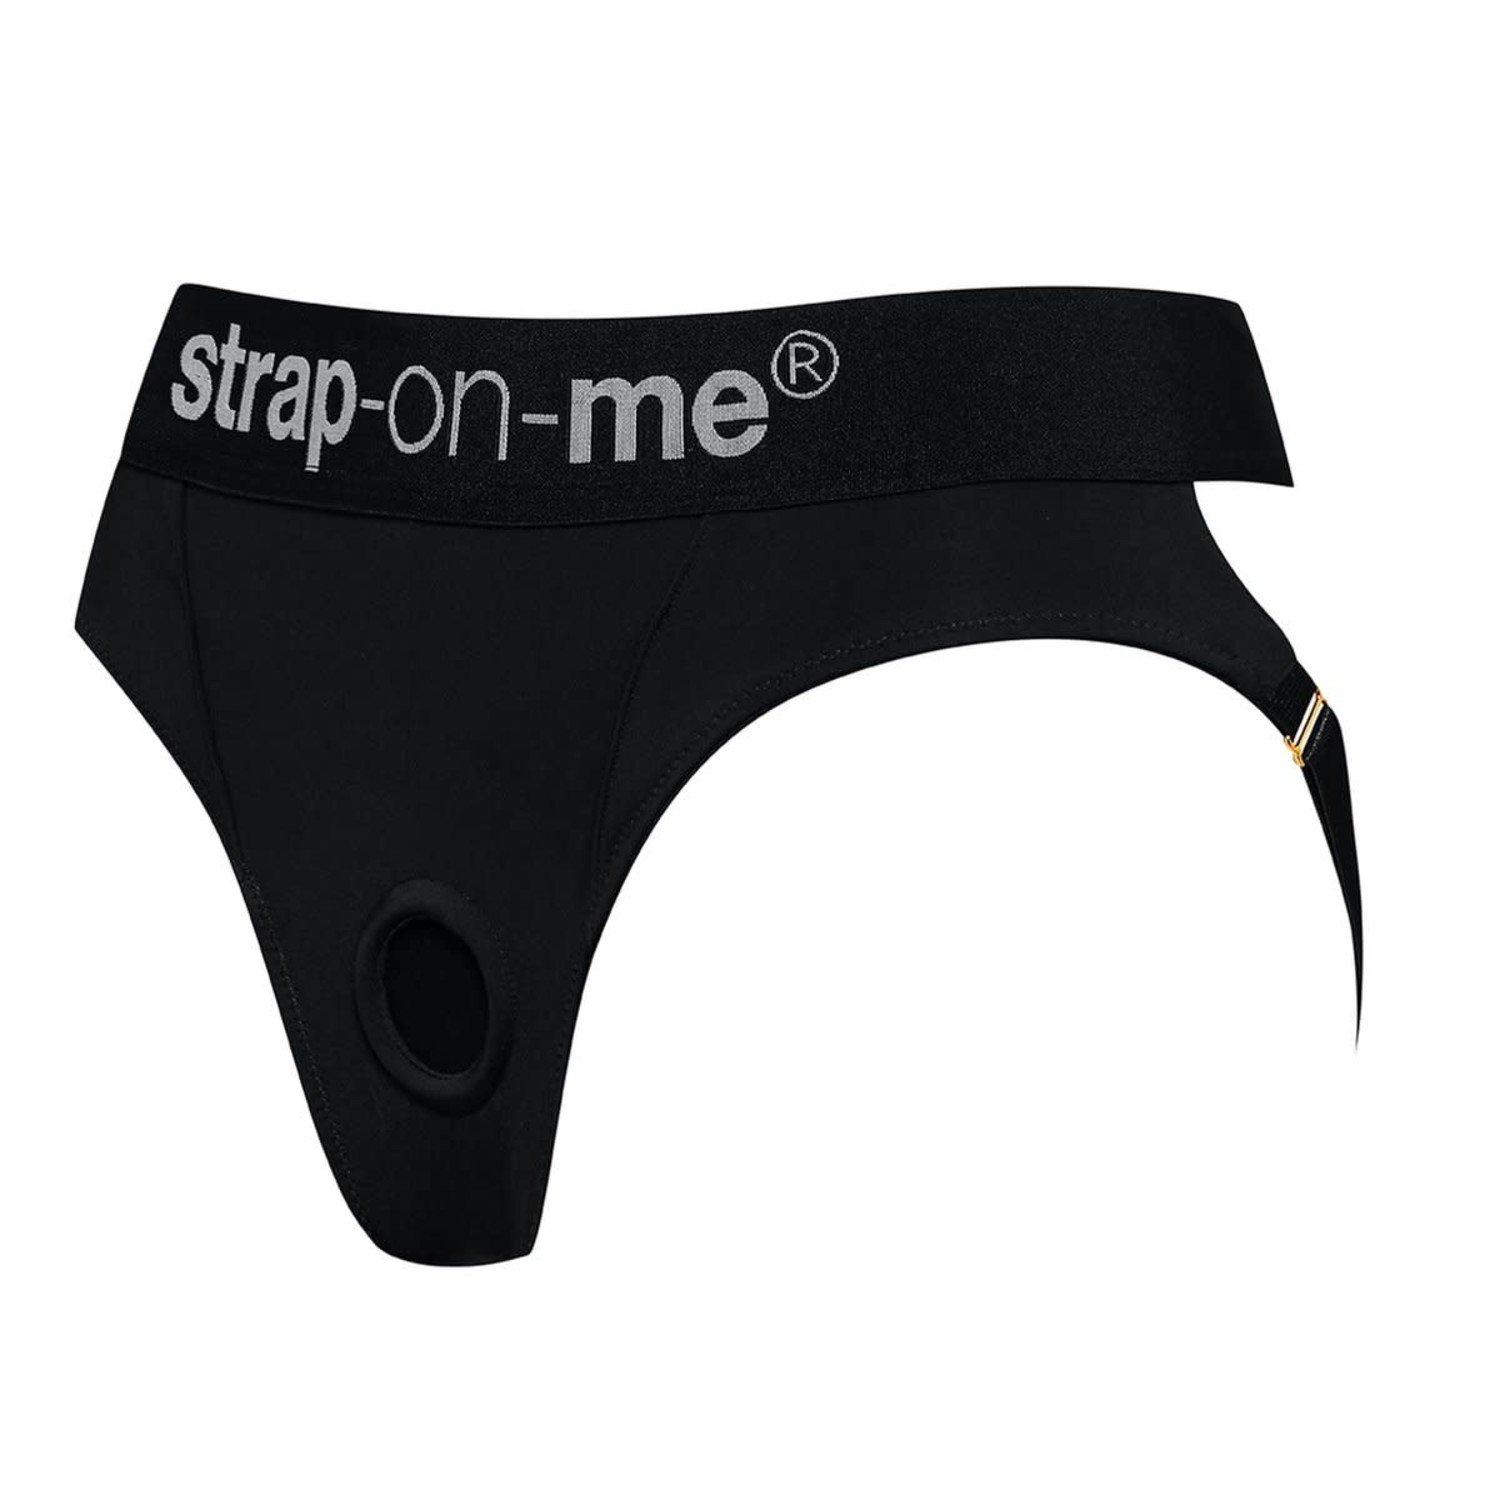 BDSM Strap-On-Me Lingerie Dildo Harness